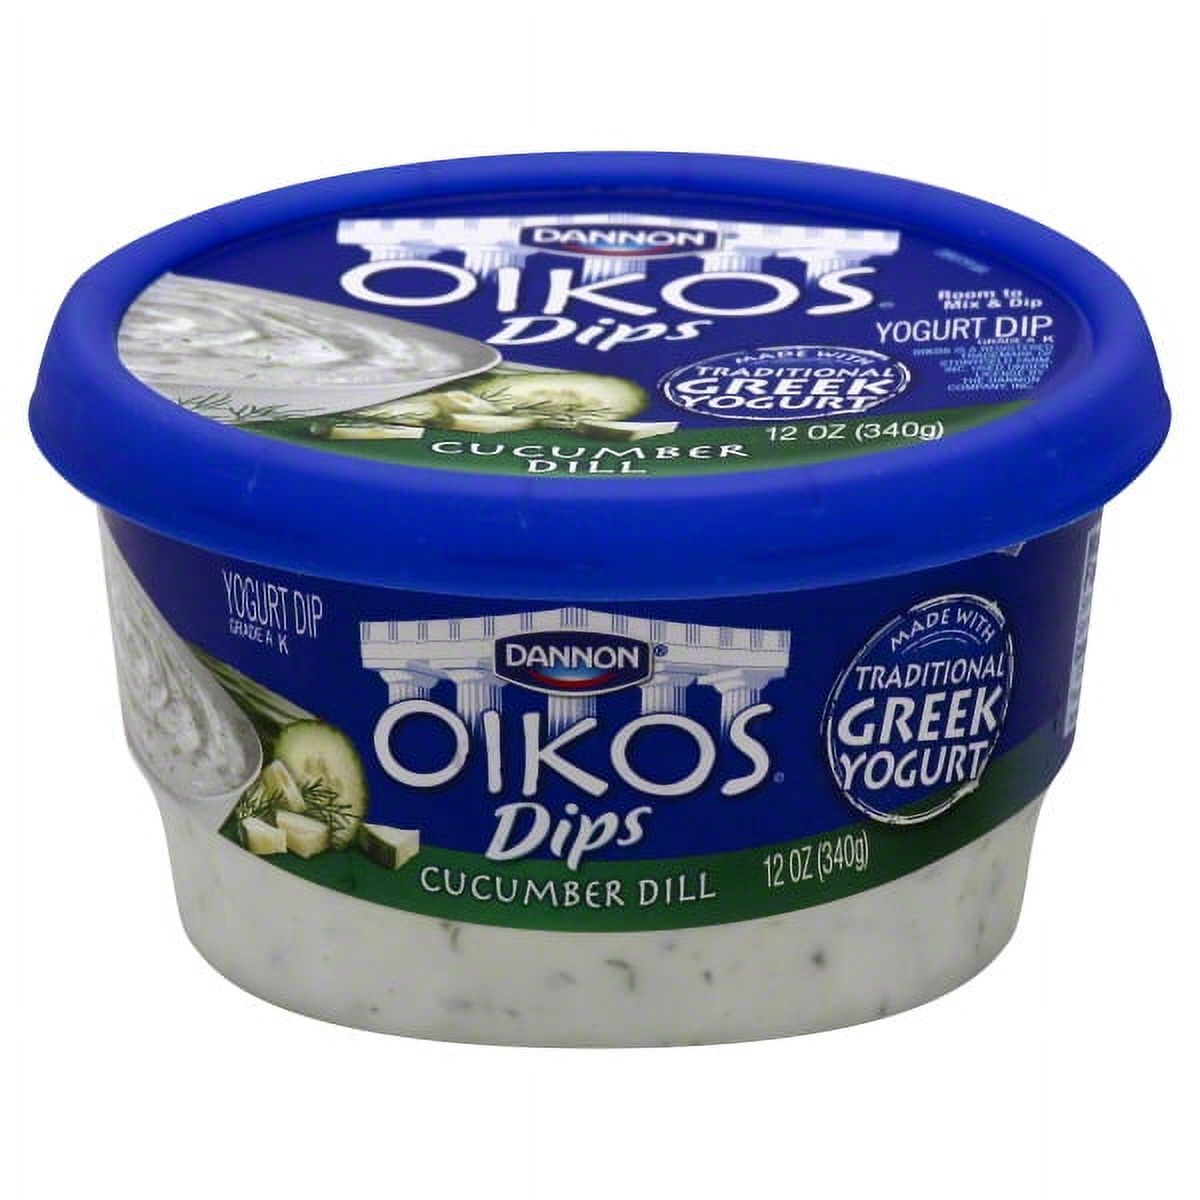 Dannon Oikos Cucumber Dill Yogurt Dips, 12 Oz. - image 1 of 1